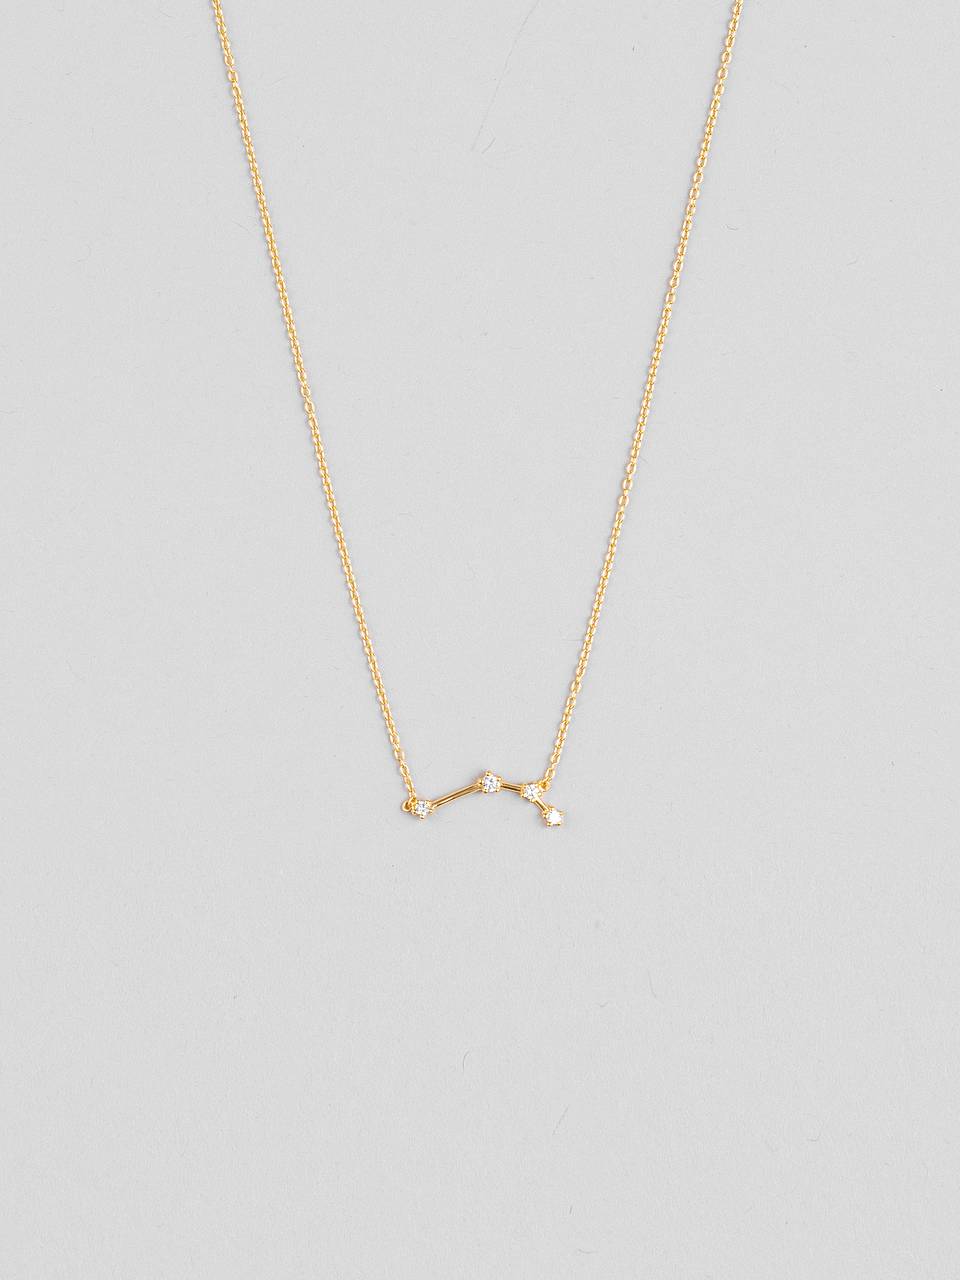 Aries Zodiac Constellation Necklace